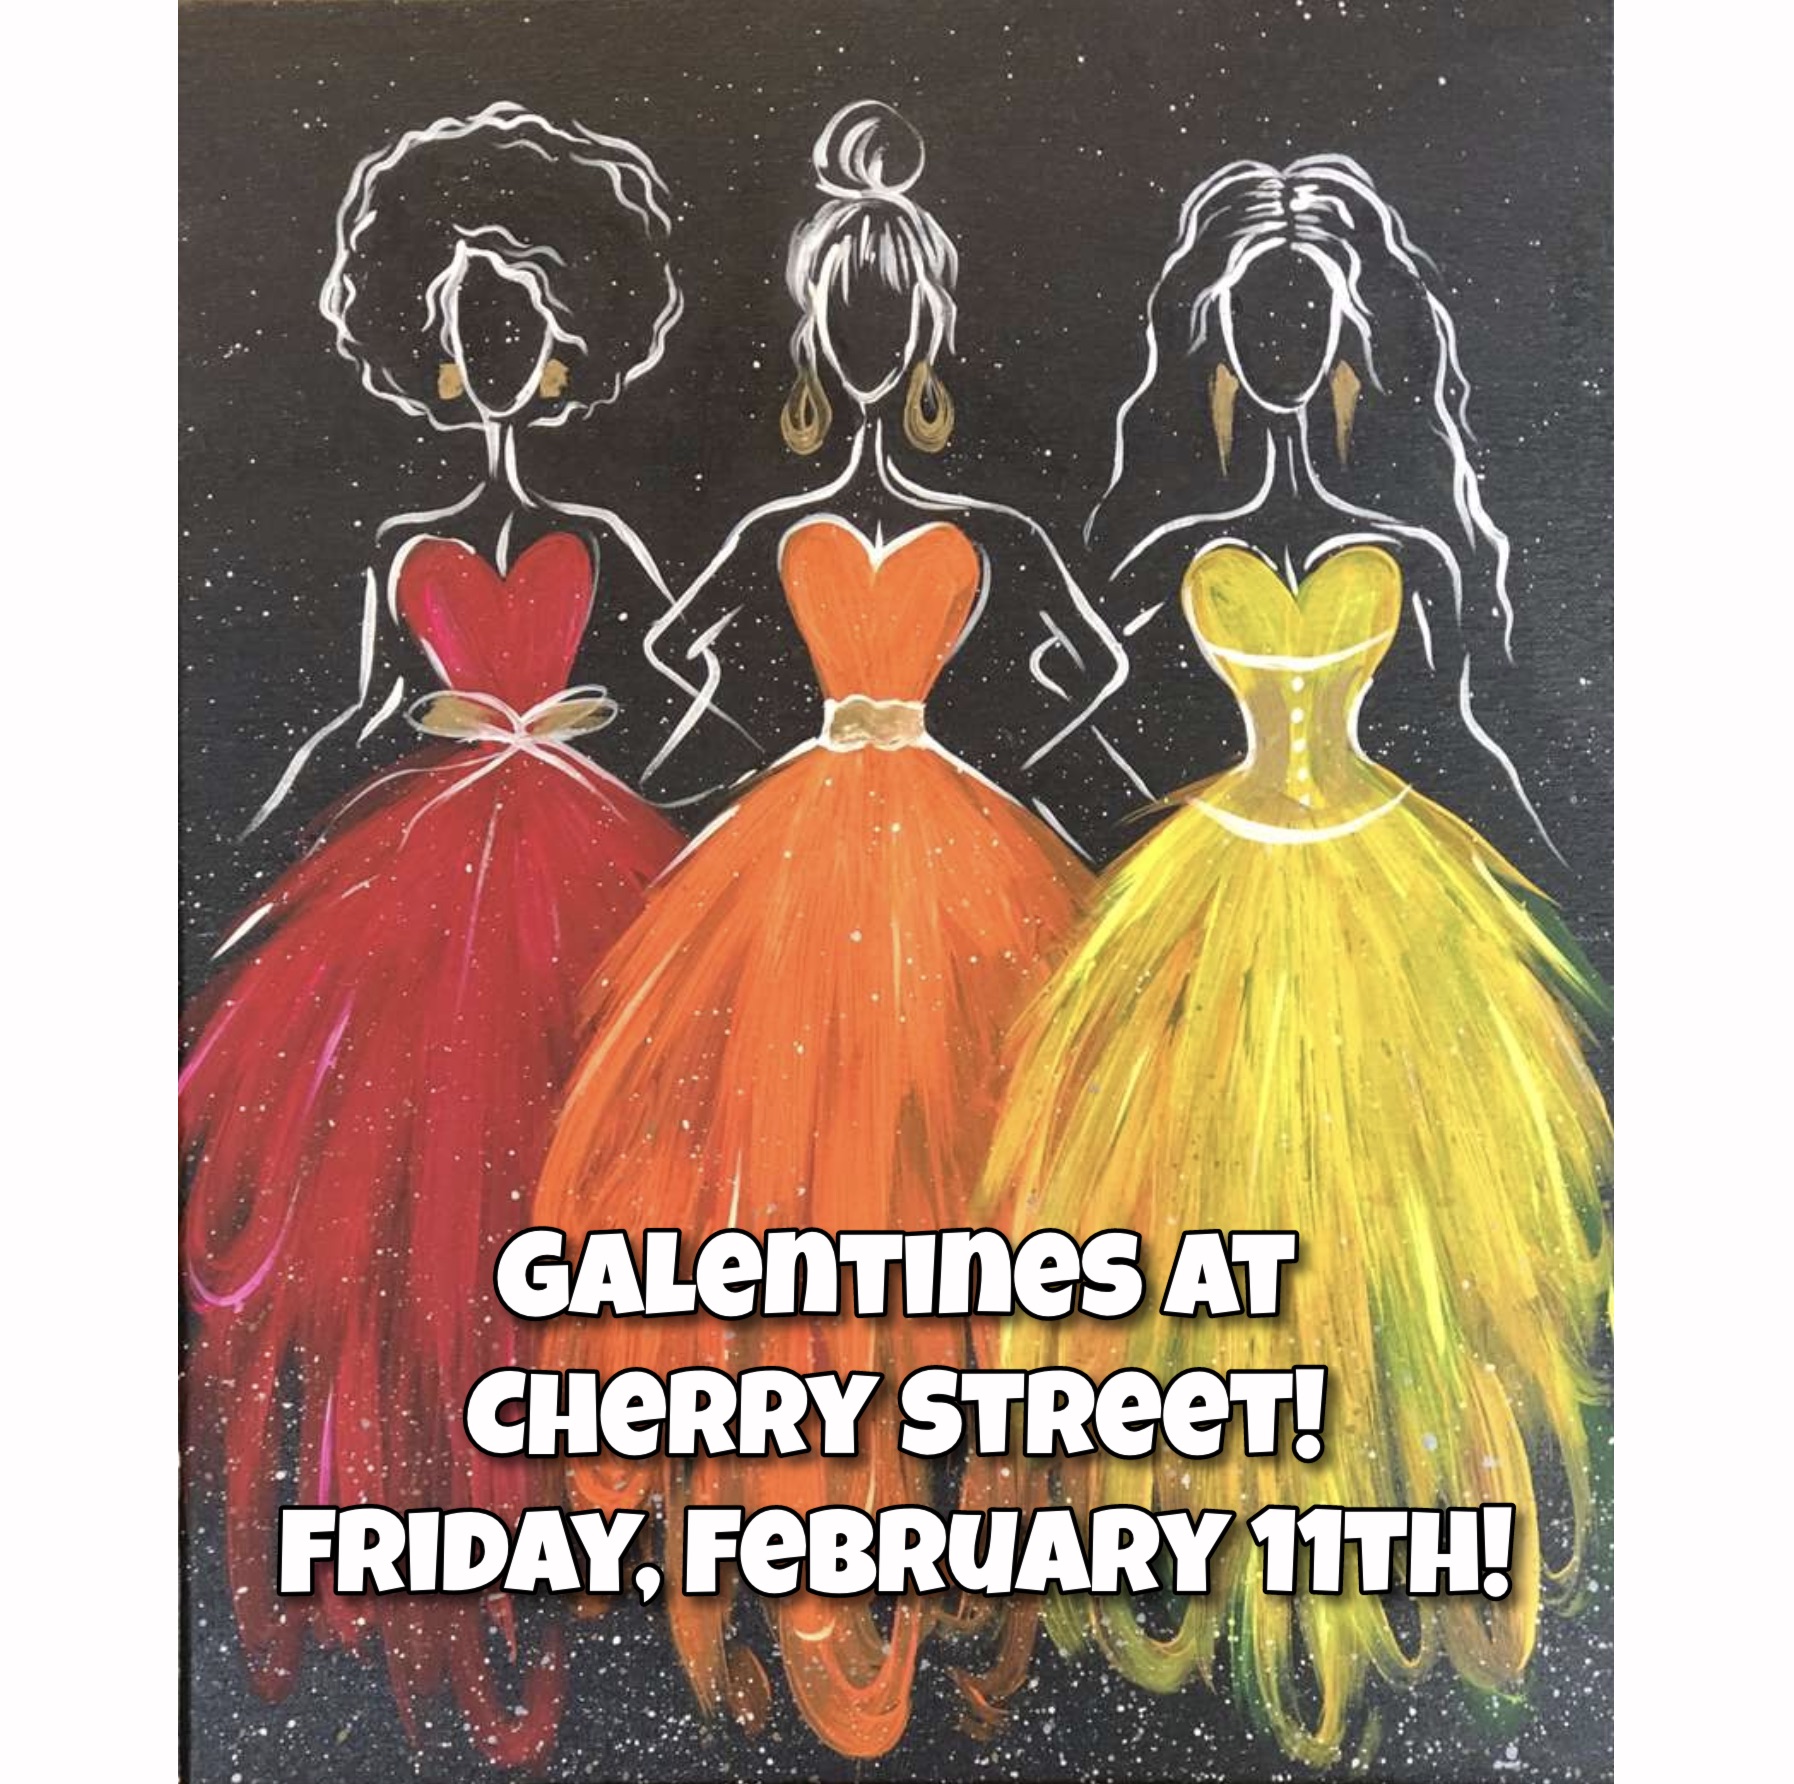 Celebrate Galentine's At Cherry Street!